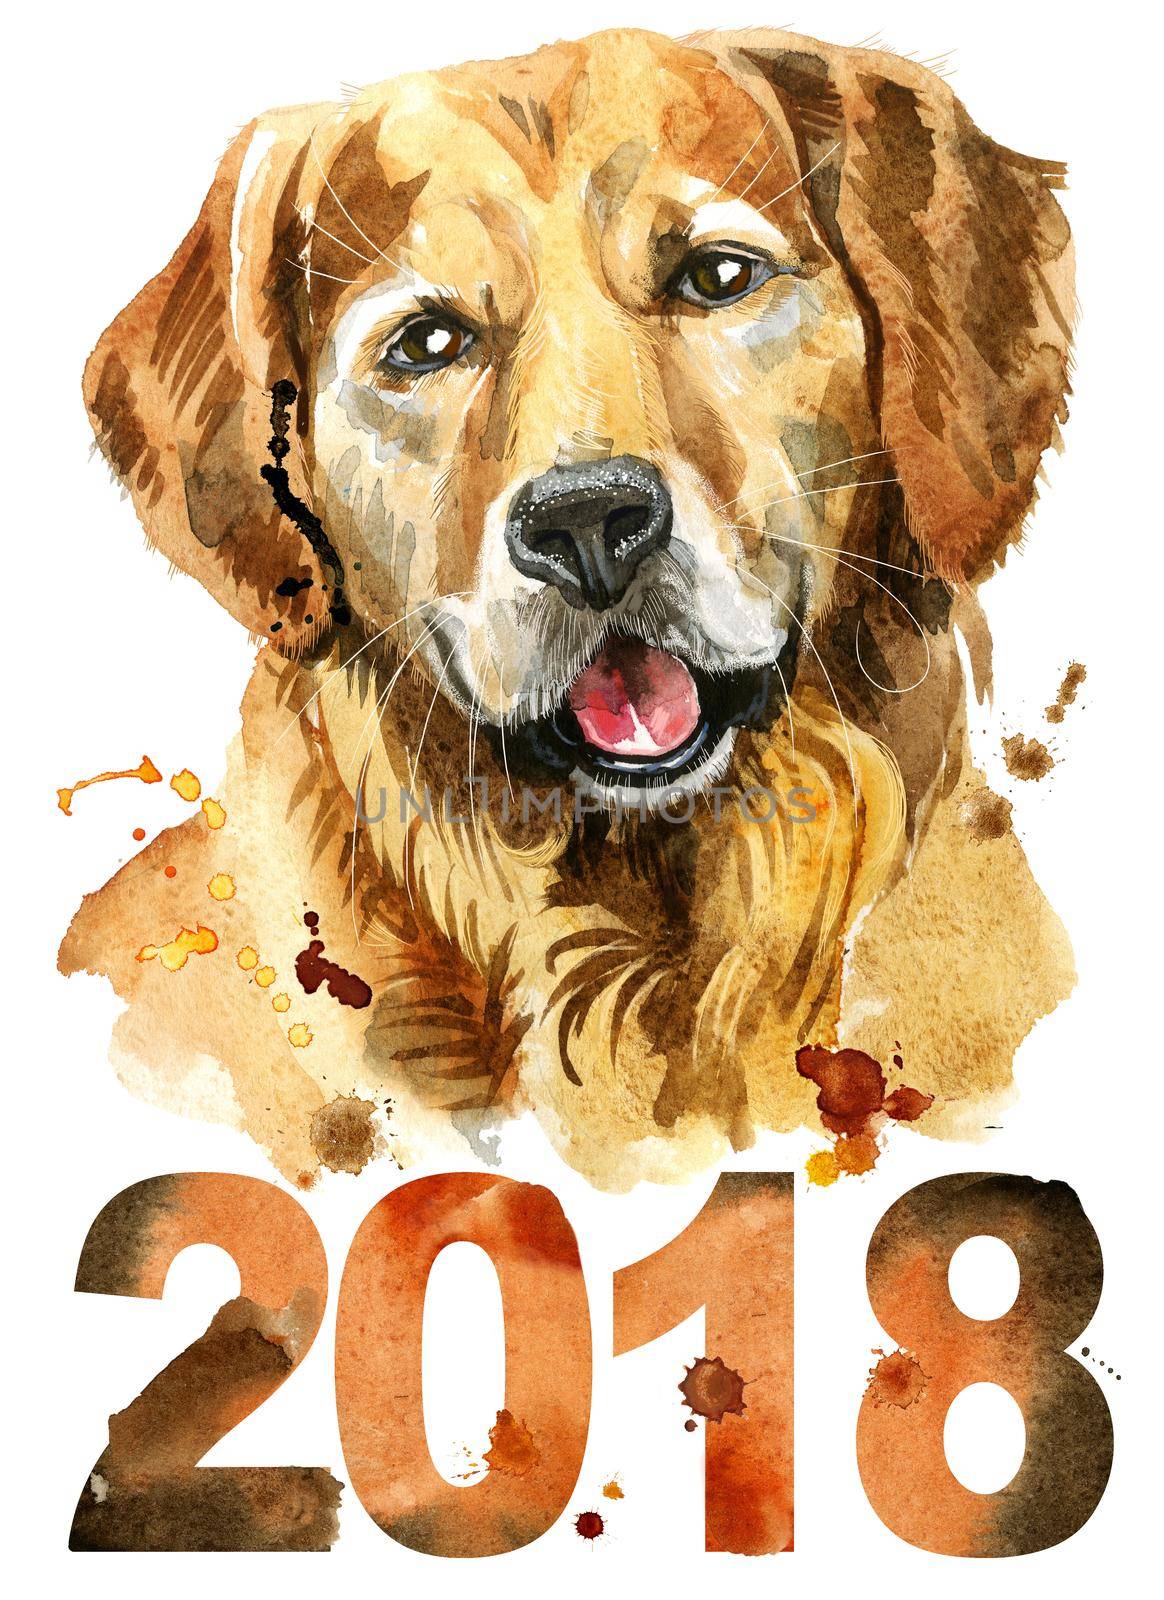 Cute Dog. Dog T-shirt graphics. watercolor golden retriever illustration. New year 2018